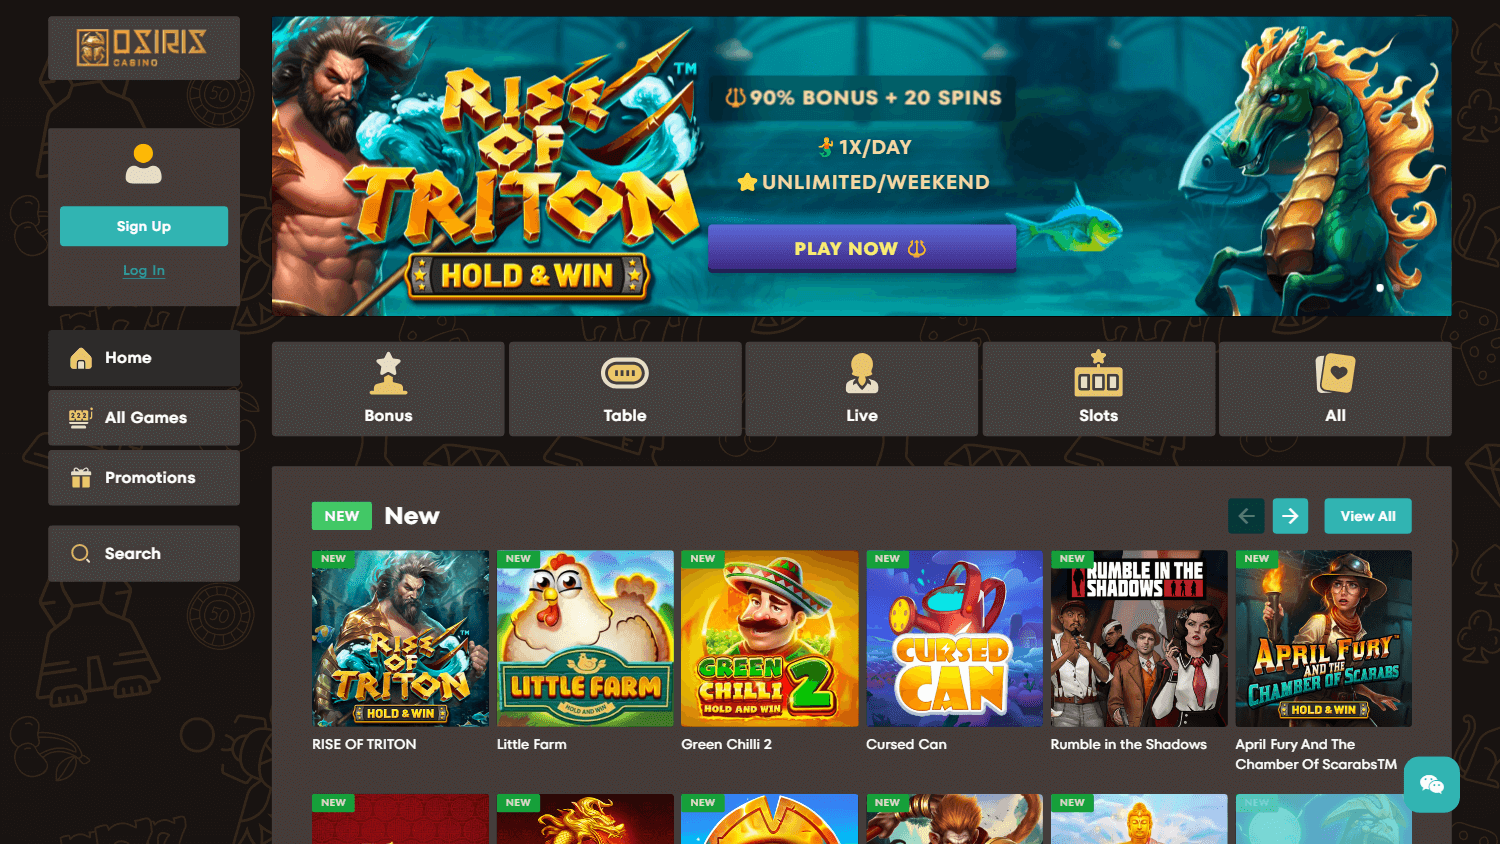 osiris_casino_homepage_desktop